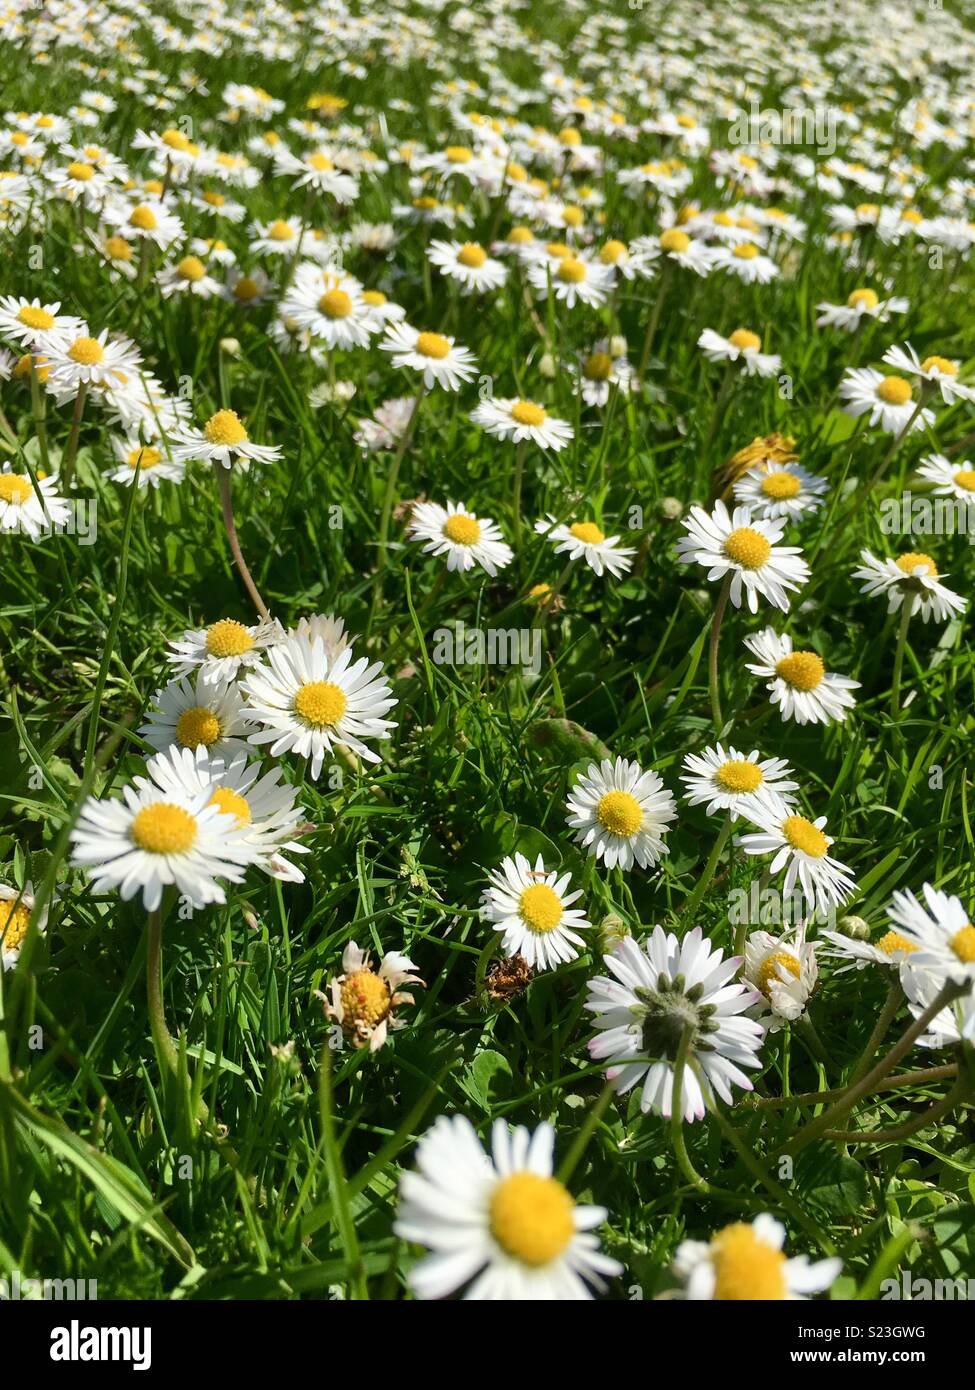 Daisy’s in green grass Stock Photo